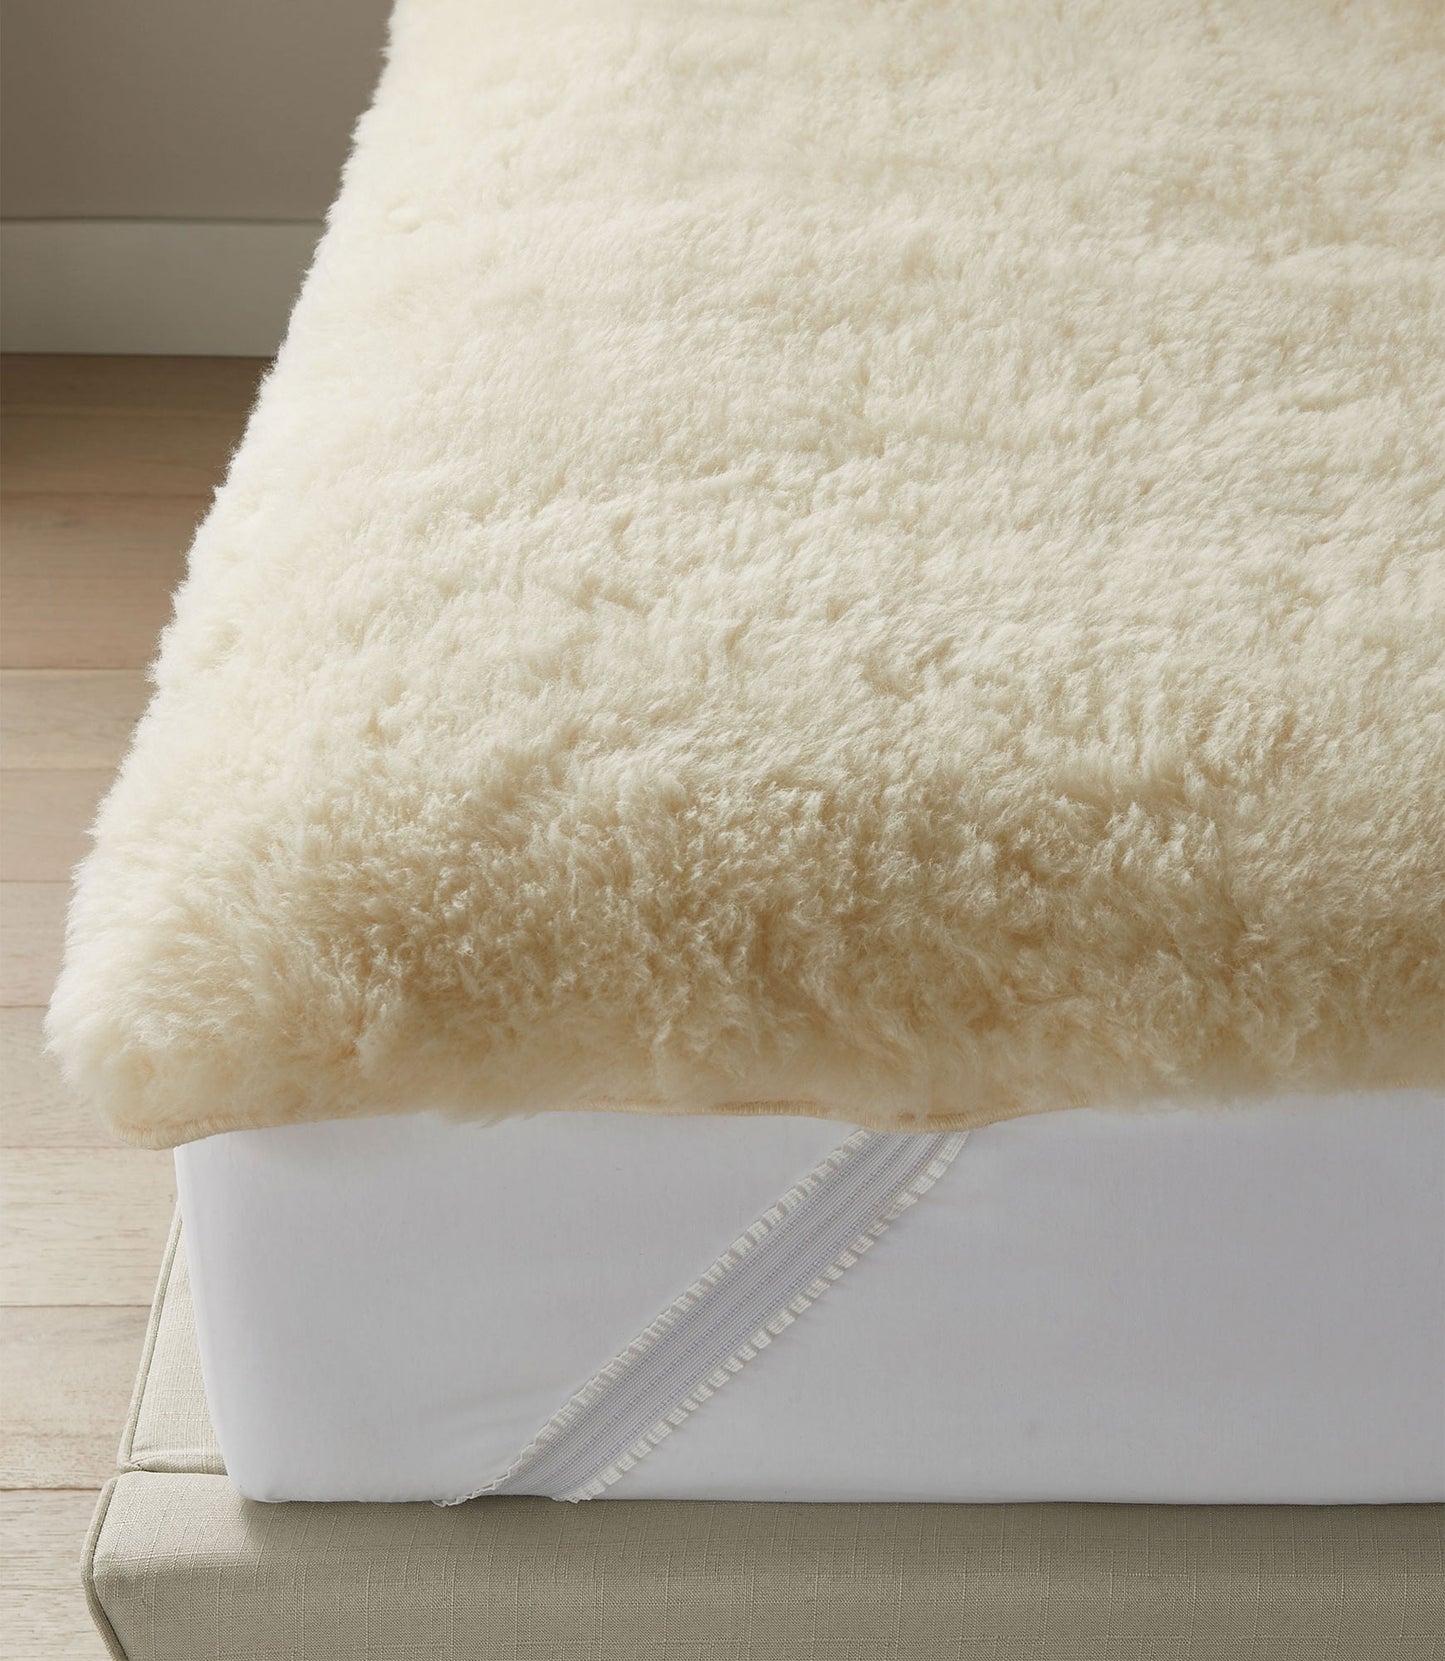 corner elastic strap on wool mattress topper